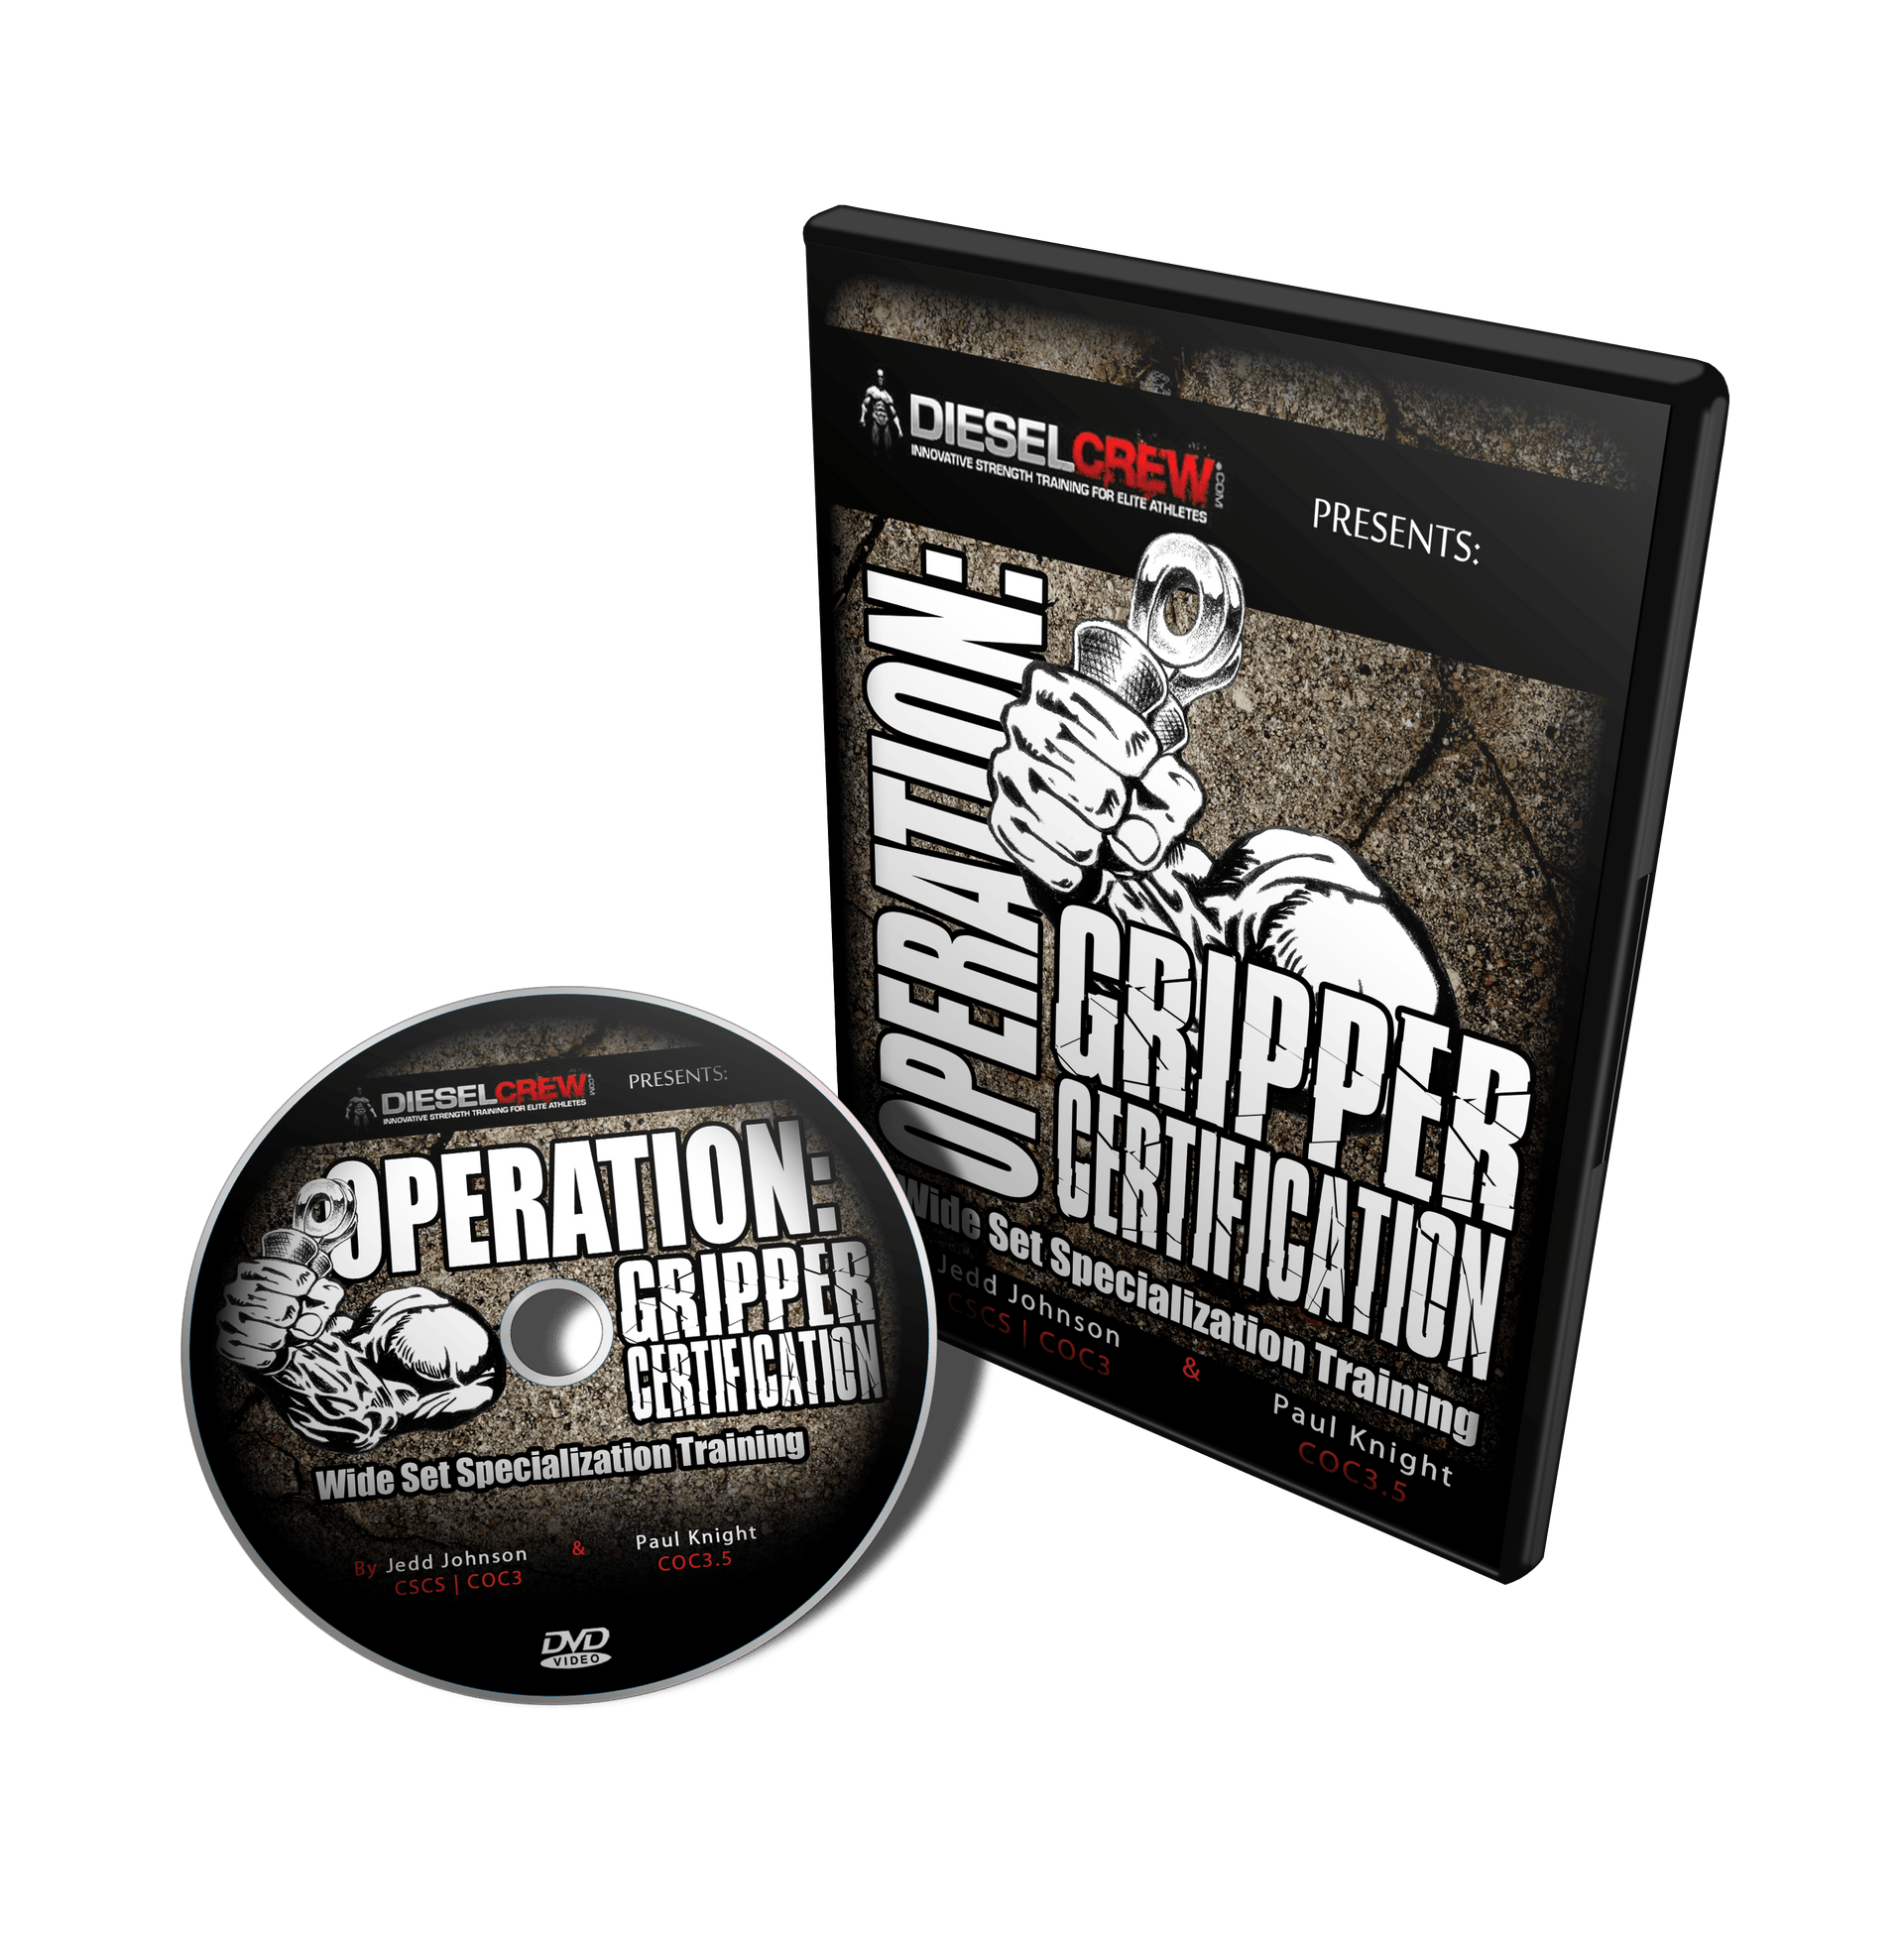 Hand Gripper Certification Digital DVD by Jedd Johnson